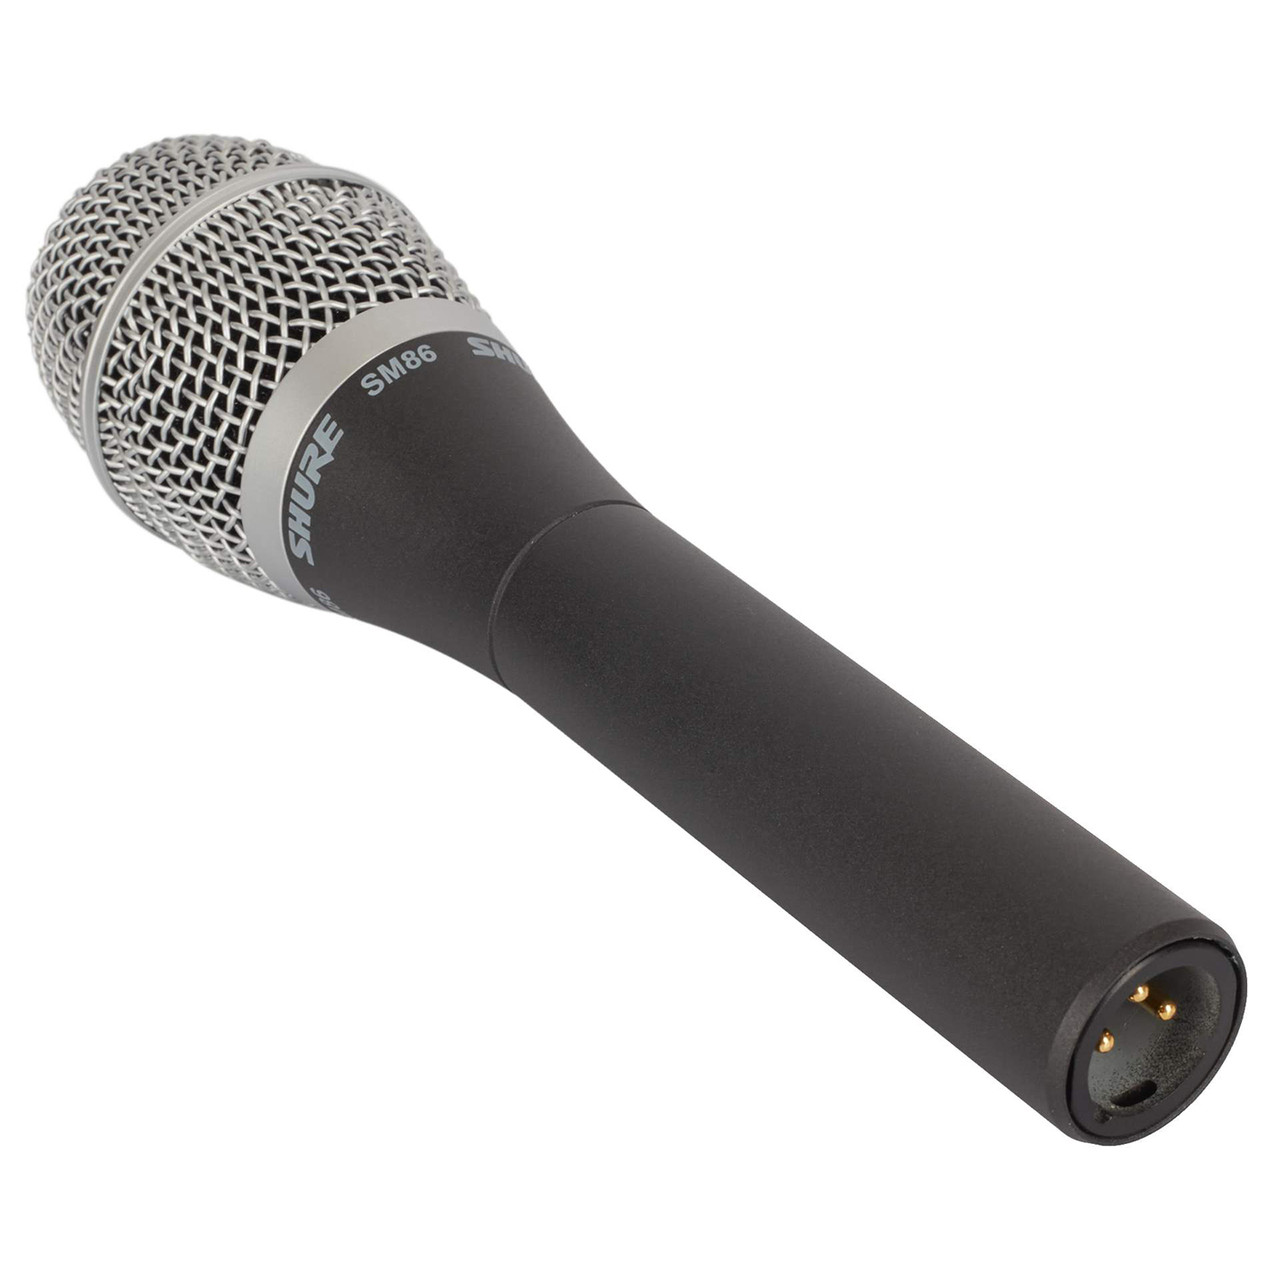 SM86 - Vocal Microphone - Shure USA